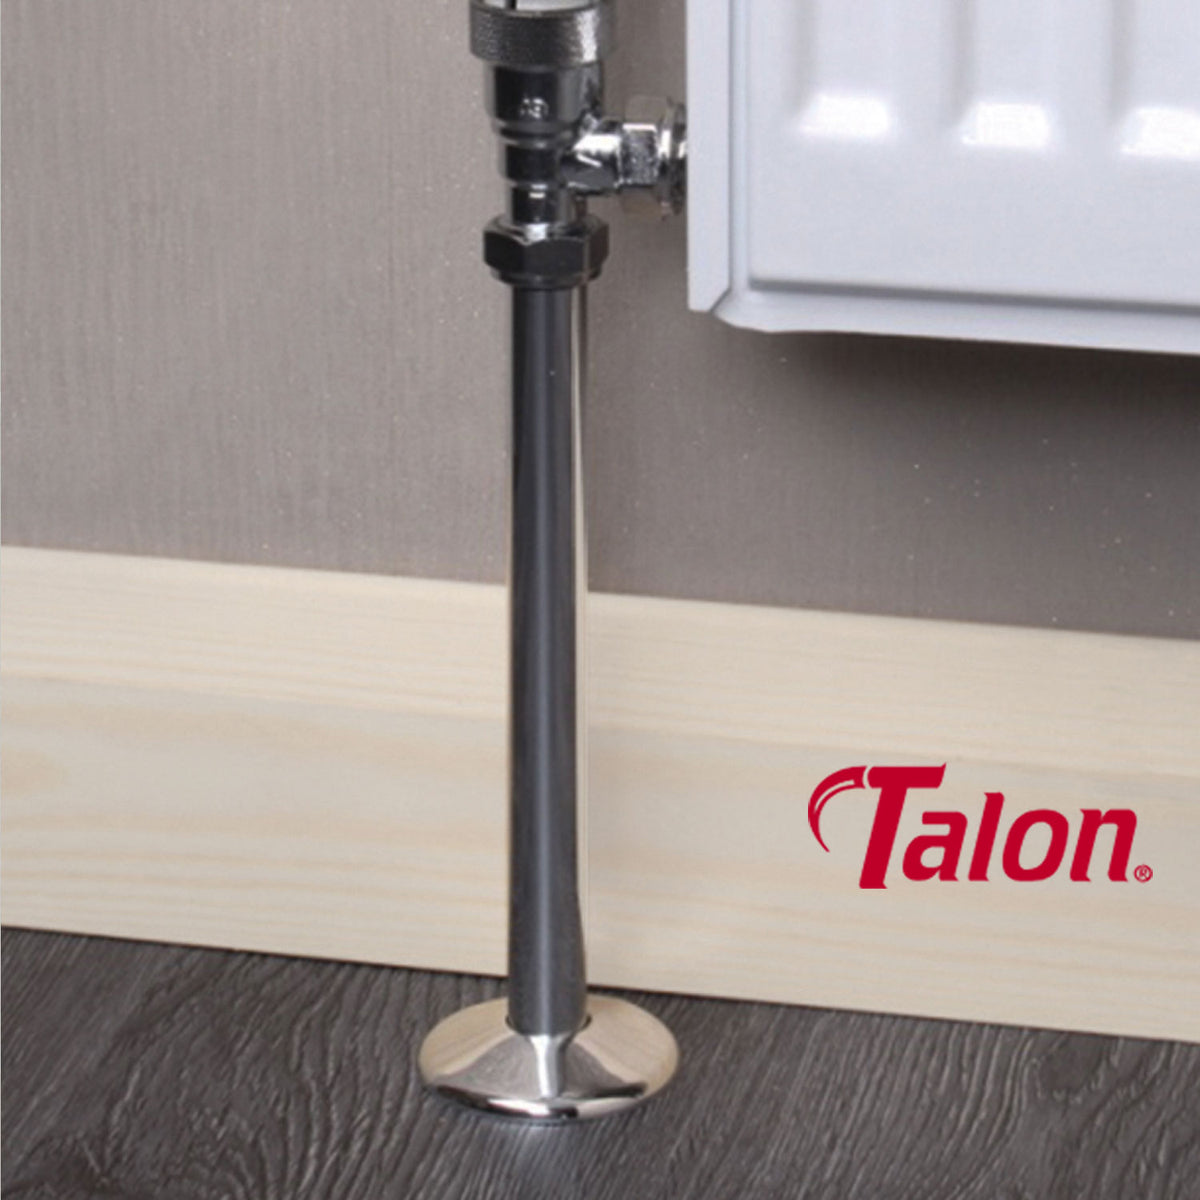 Talon Snappit Towel Rail Radiator Pipe Covers